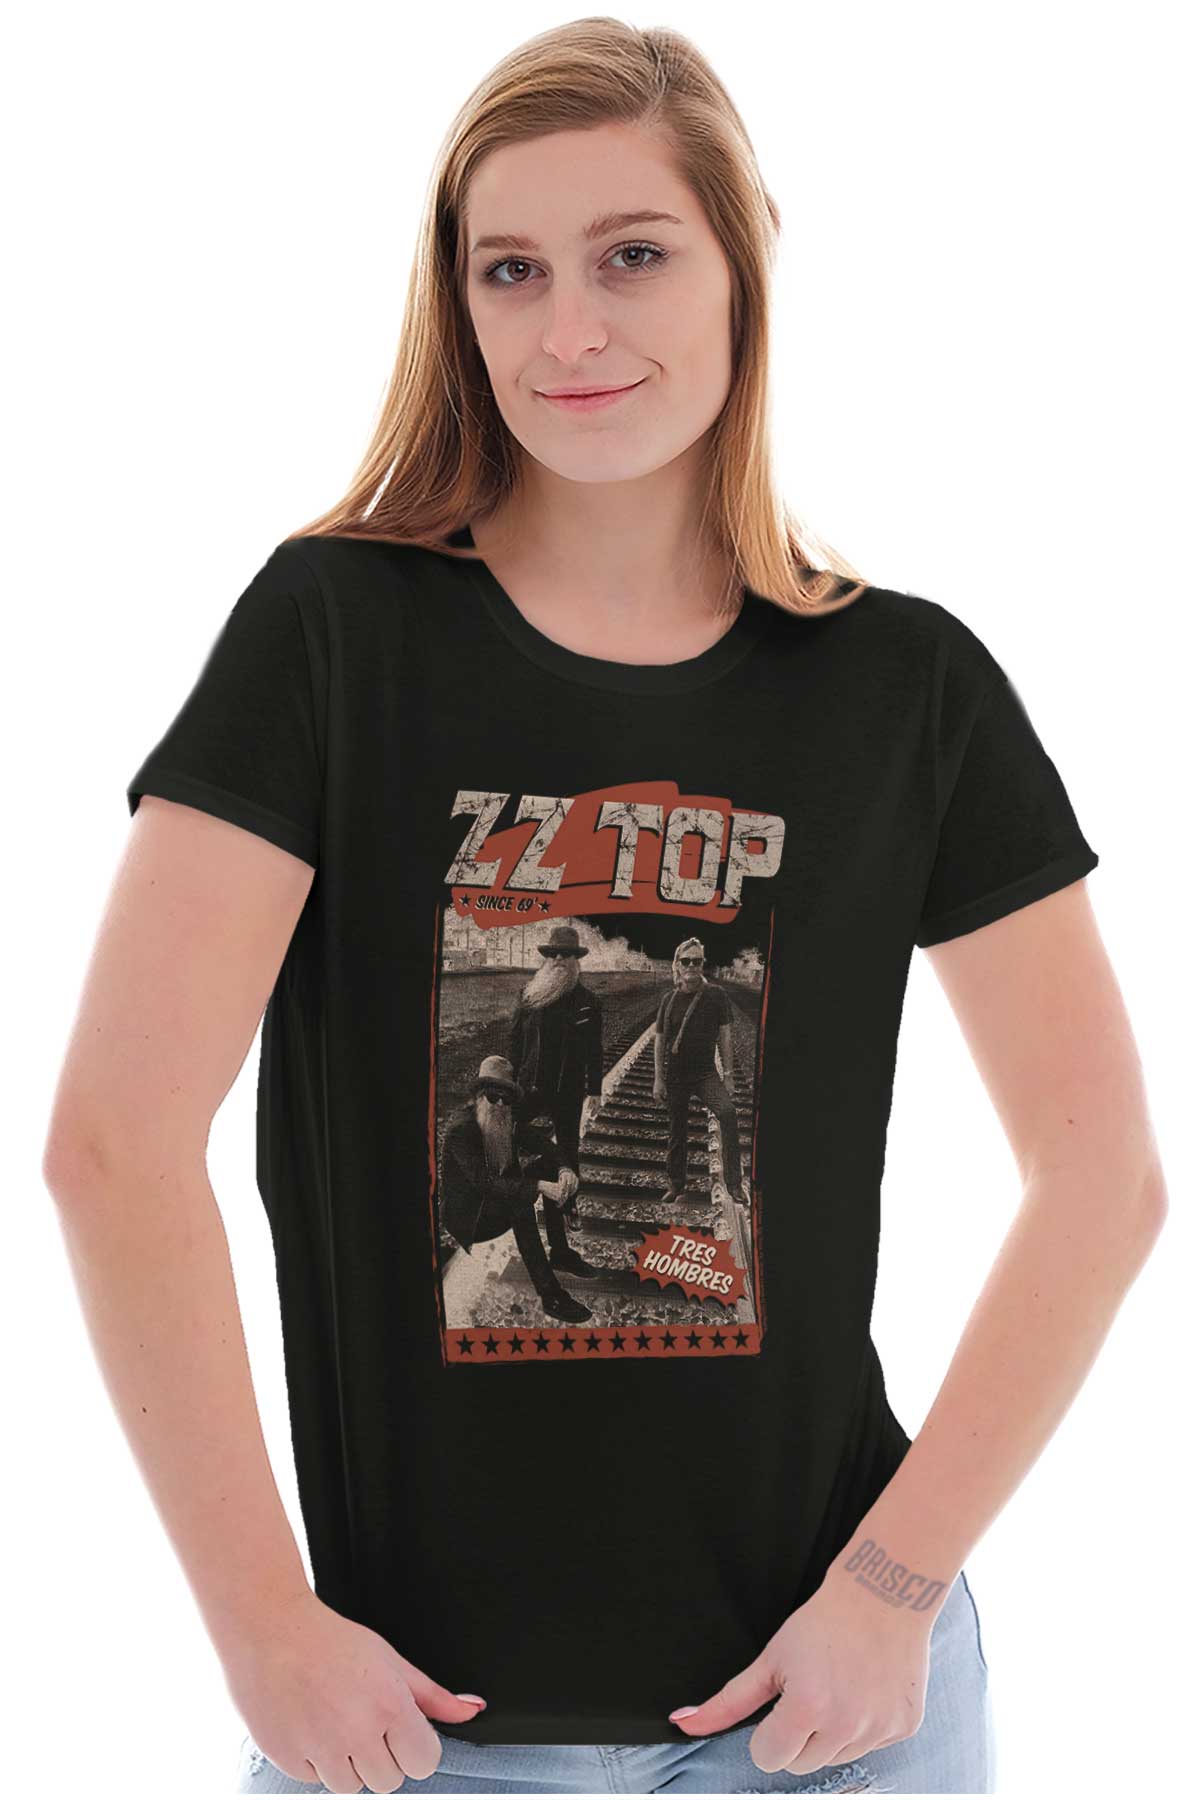 Official ZZ Top Tres Hombres Concert Women's T Shirt Ladies Tee Brisco Brands S - image 1 of 4